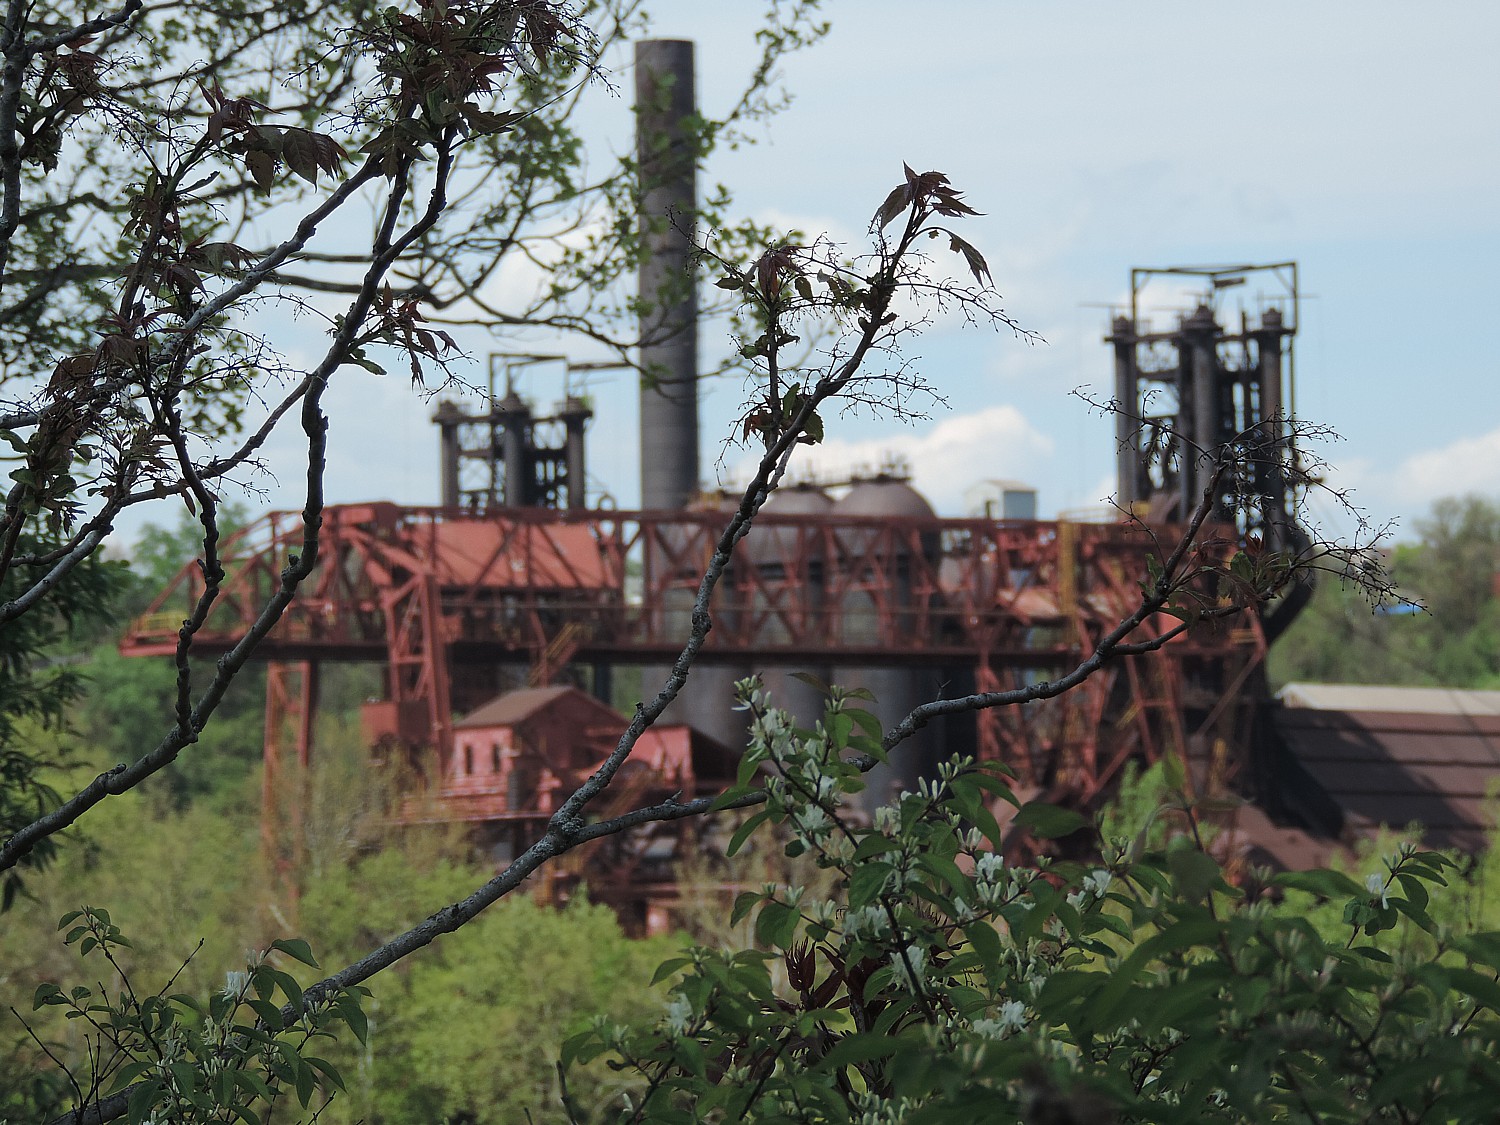 Pittsburgh’s industrial past comes into view © 2016 Karen Rubin/goingplacesfarandnear.com